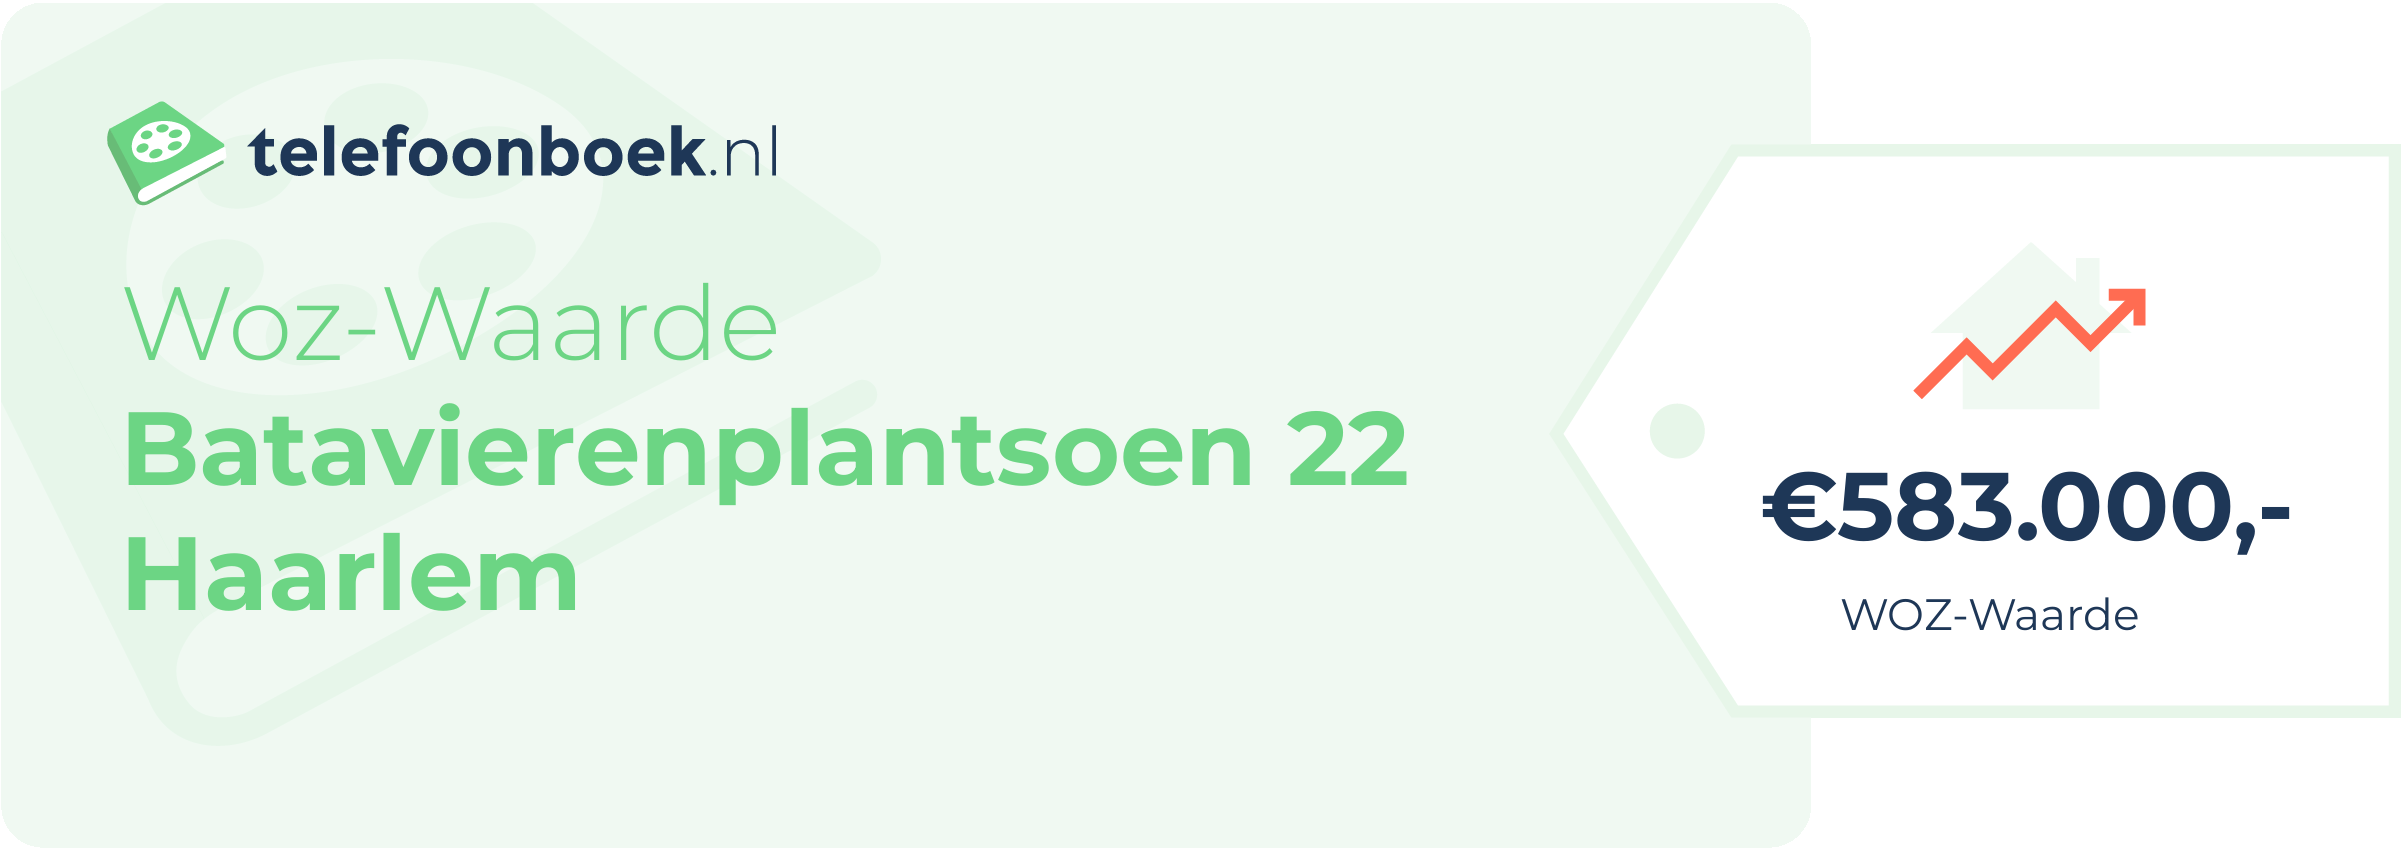 WOZ-waarde Batavierenplantsoen 22 Haarlem